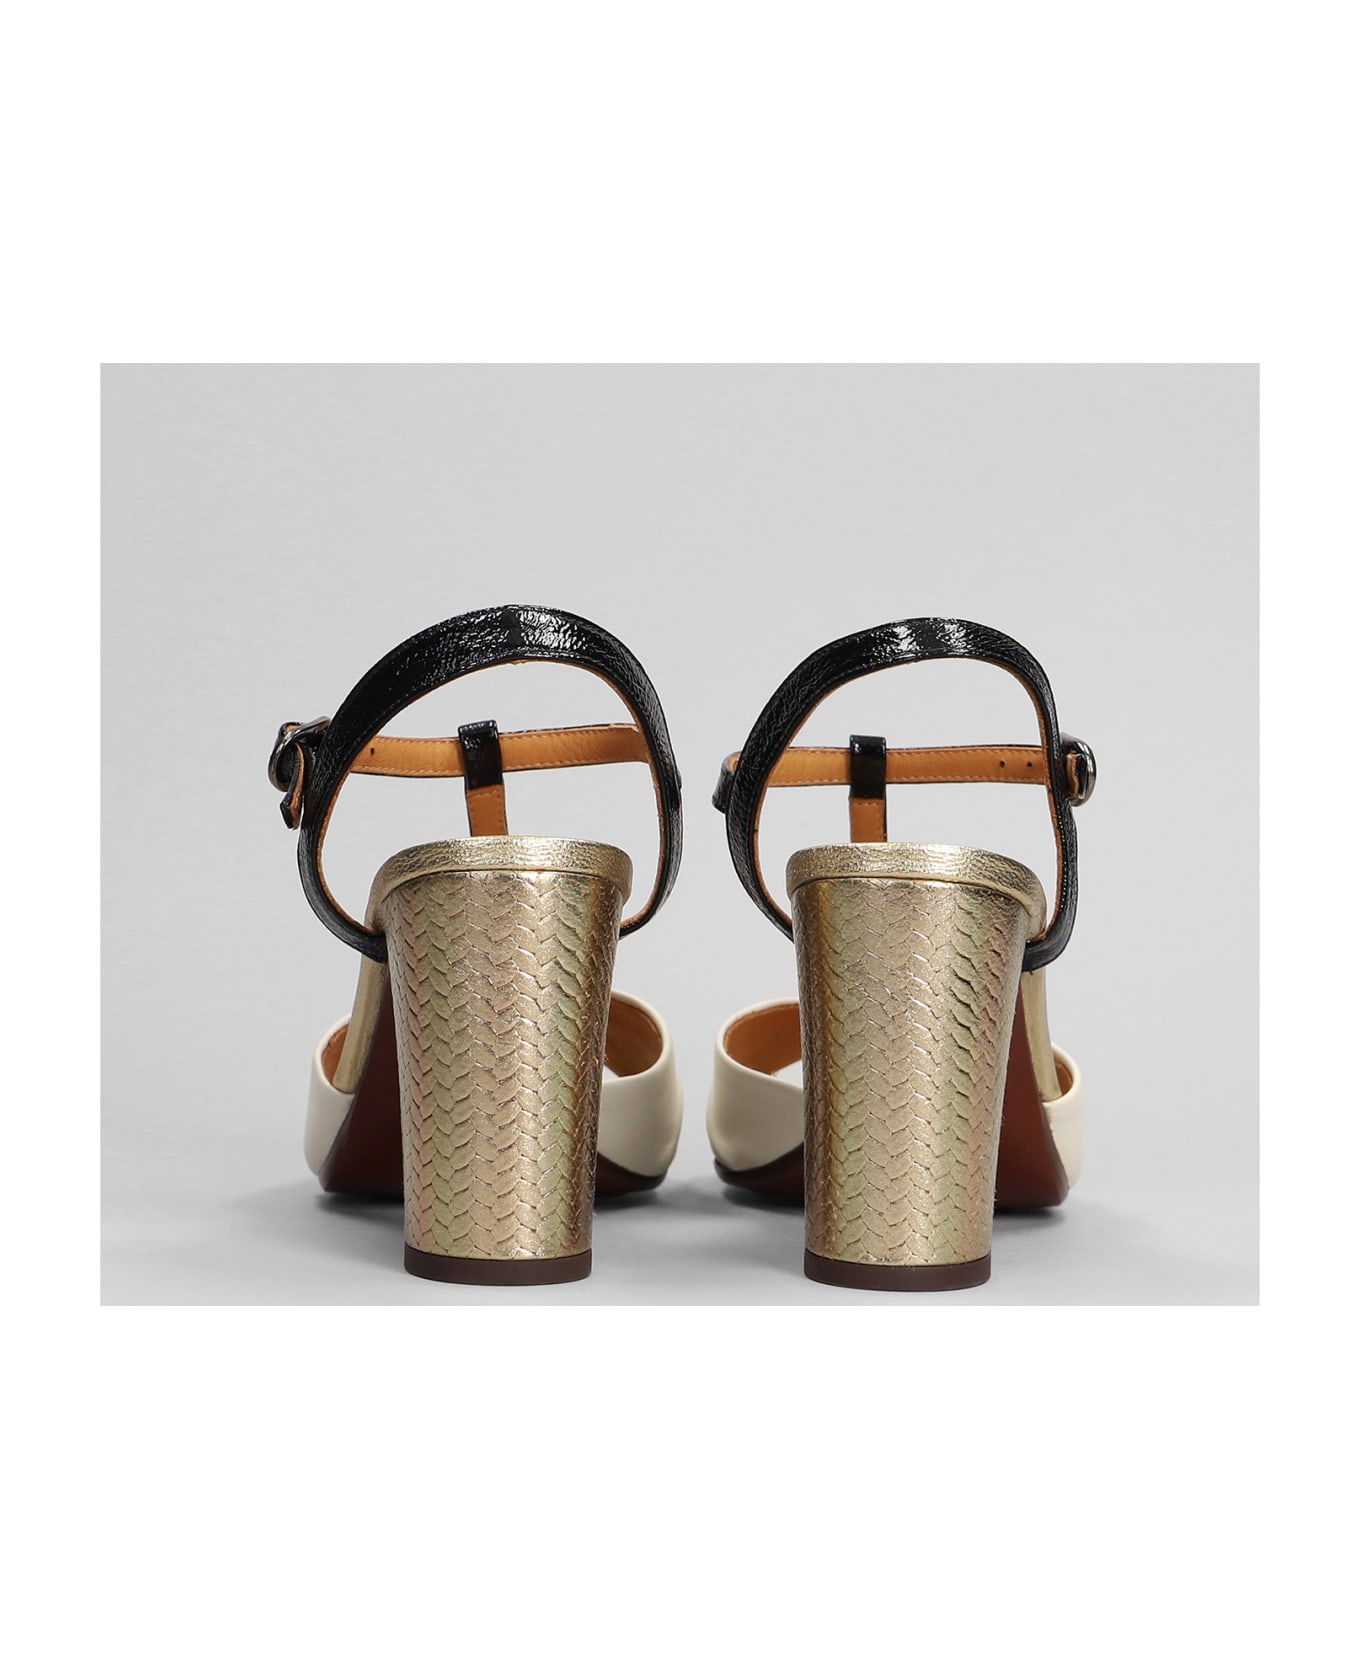 Chie Mihara Biagio Sandals In Beige Leather - beige